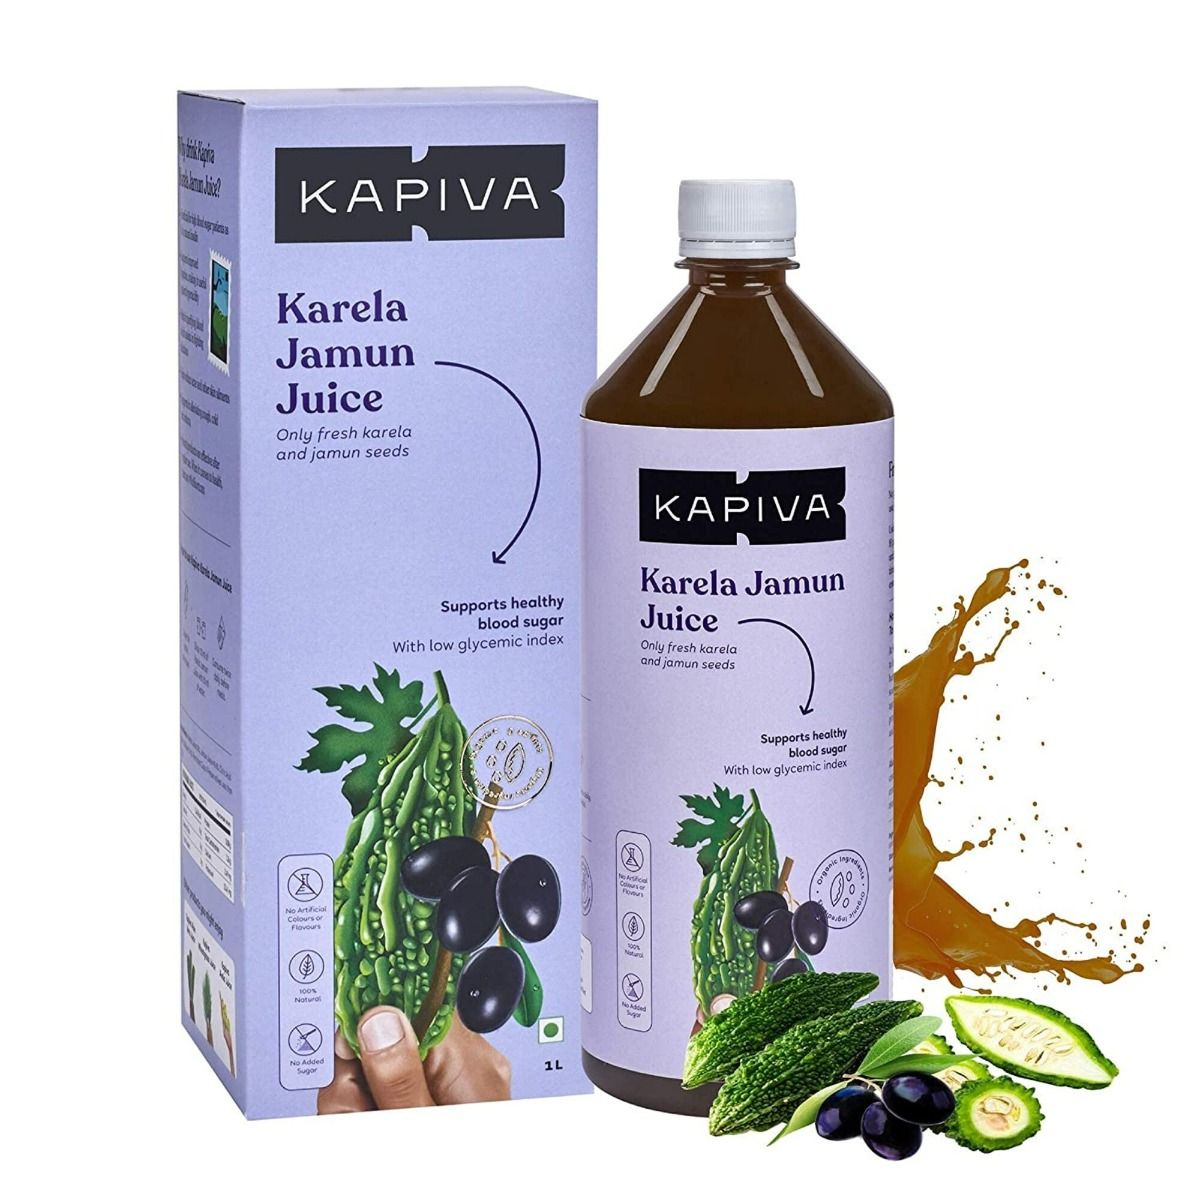 Buy Kapiva Karela Jamun Juice, 1 L Online